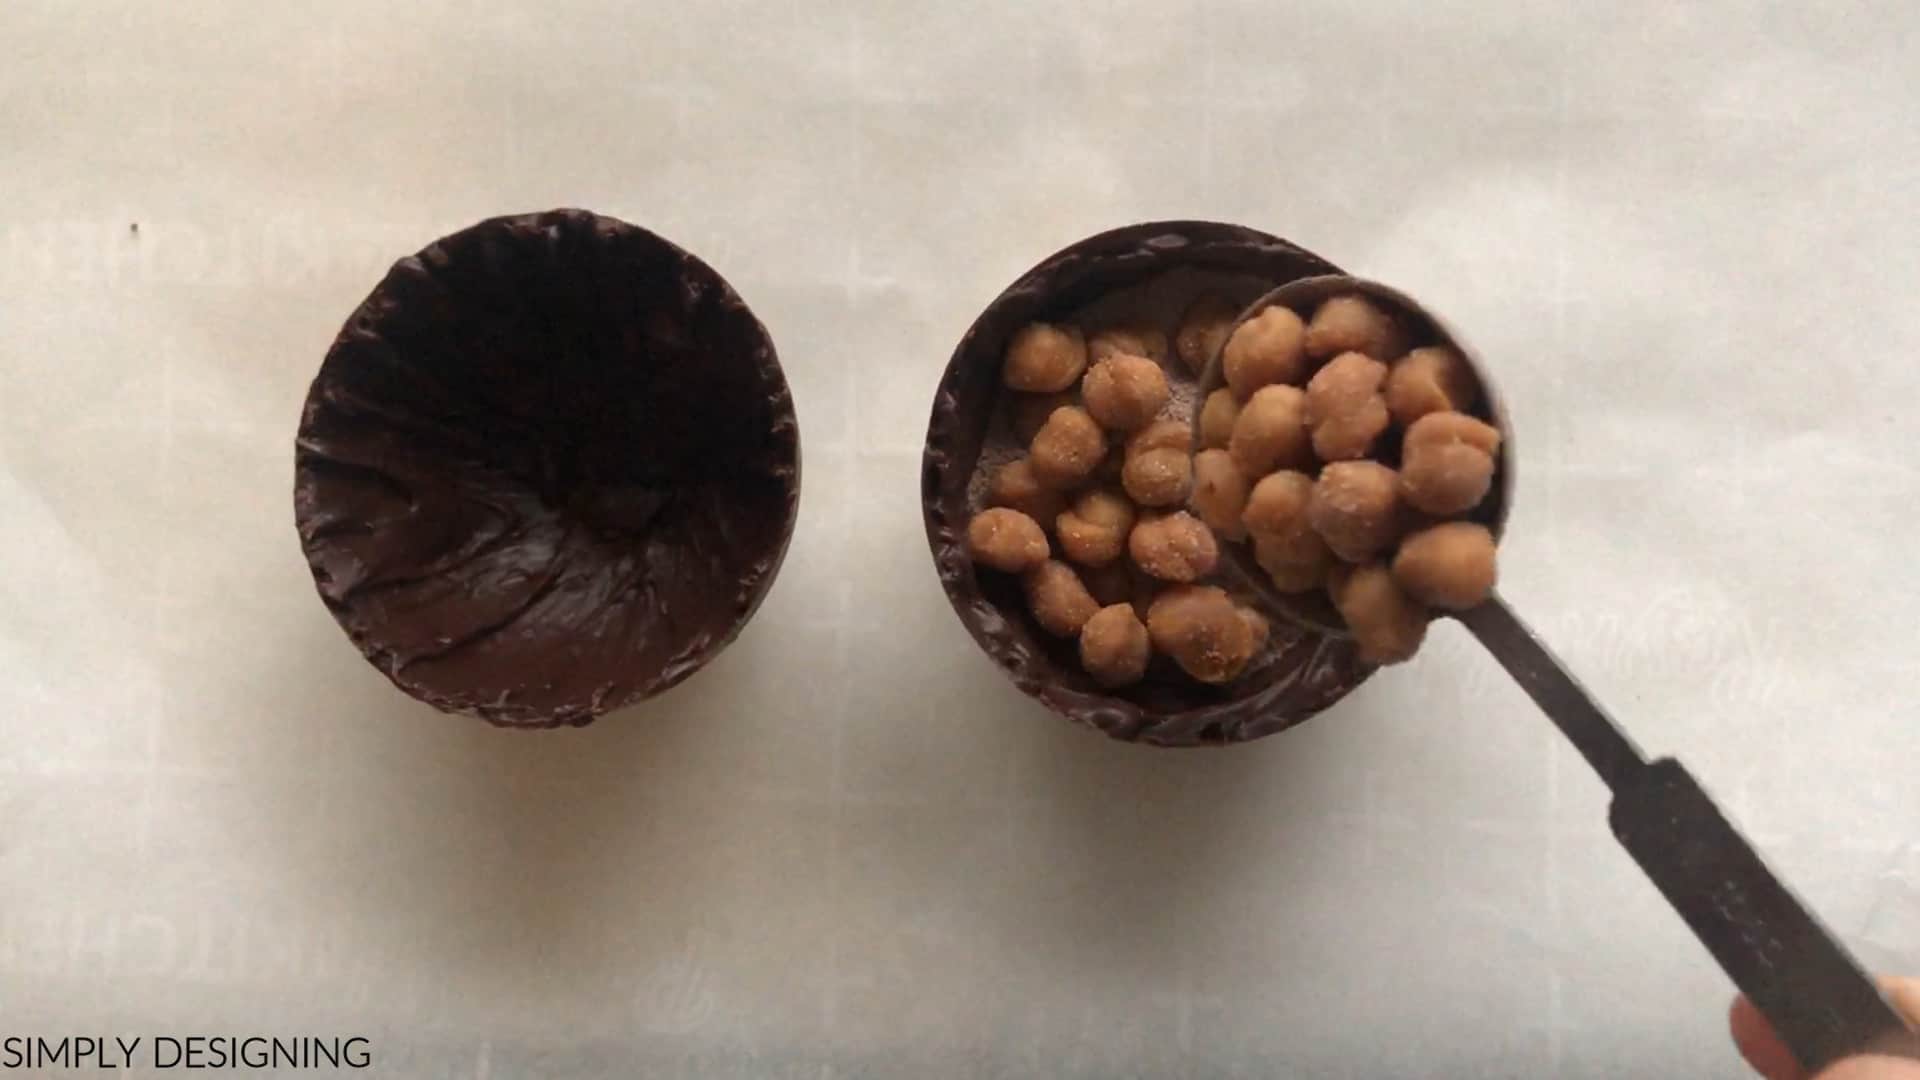 put caramel bits into hollow chocolate spheres for caramel hot chocolate bombs